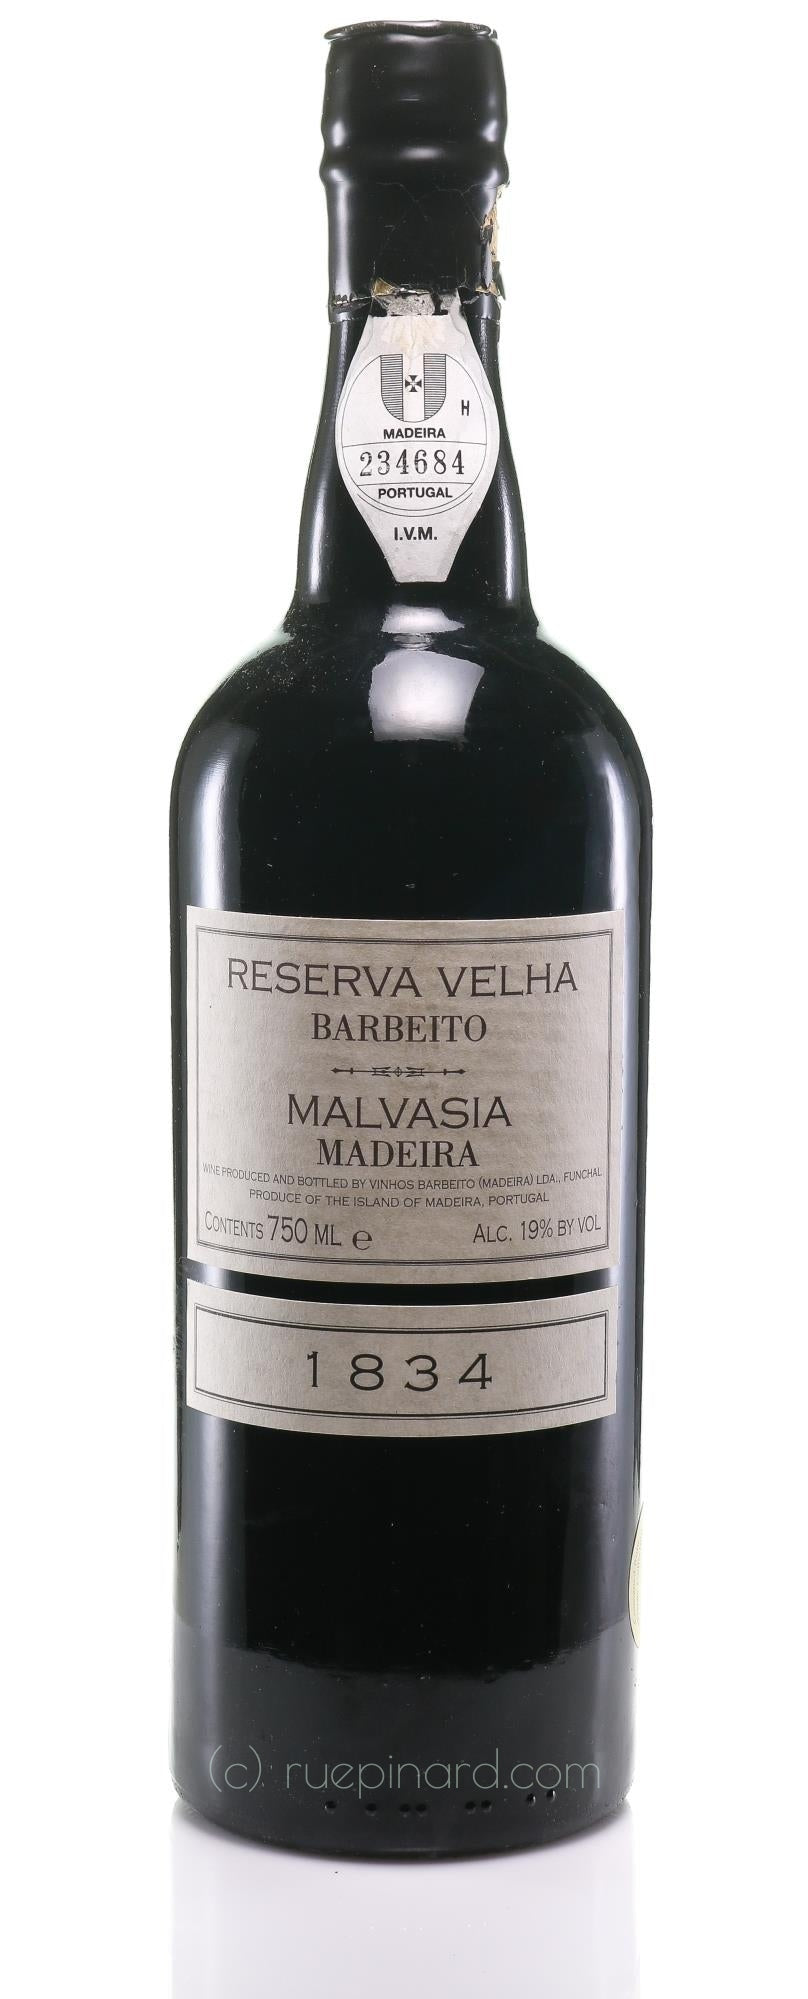 Barbeito Malvasia 1834 Madeira Reserva Velha - Rue Pinard